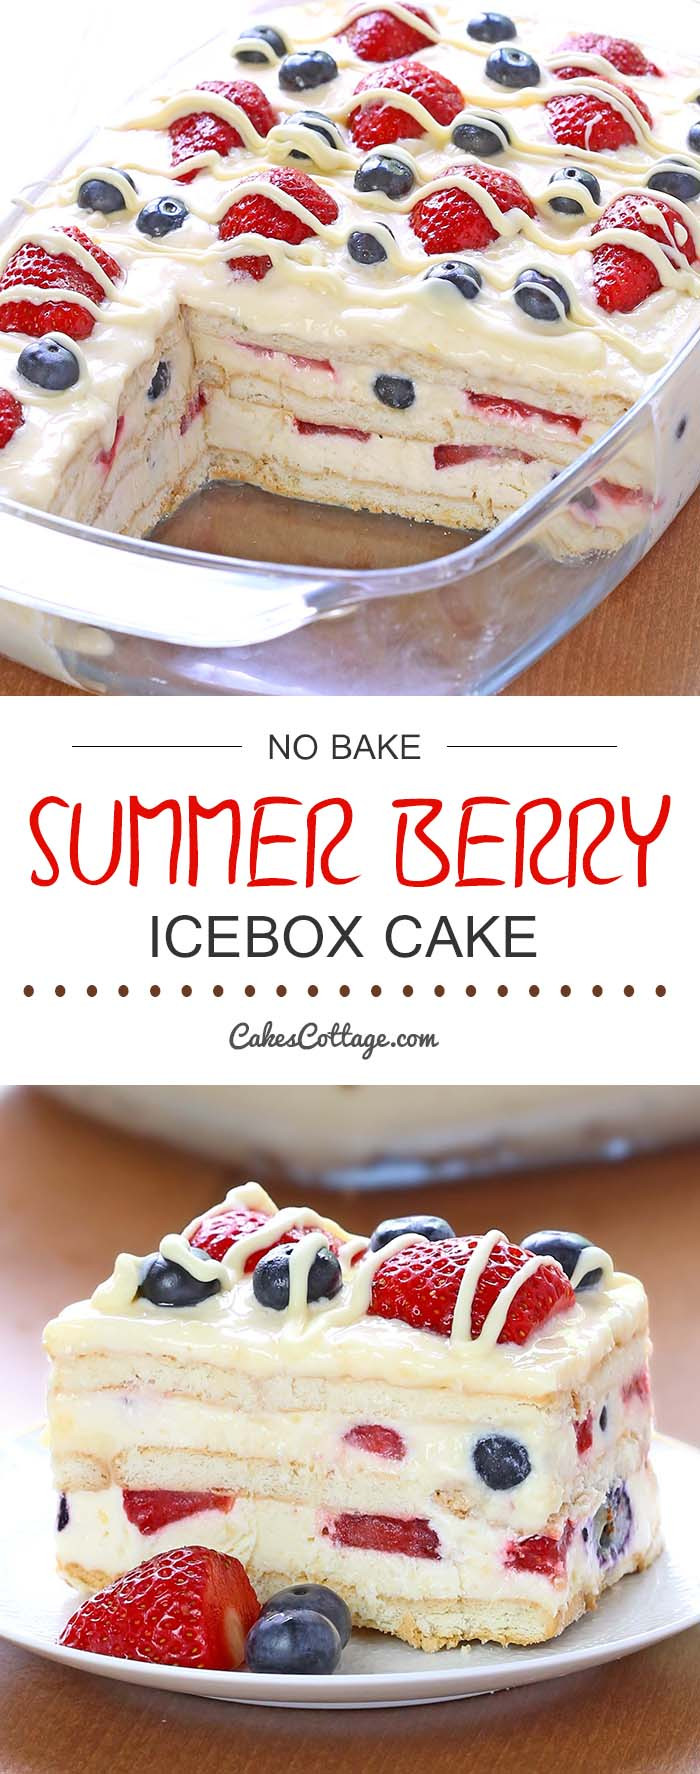 Quick Easy Summer Desserts
 No Bake Summer Berry Icebox Cake Cakescottage